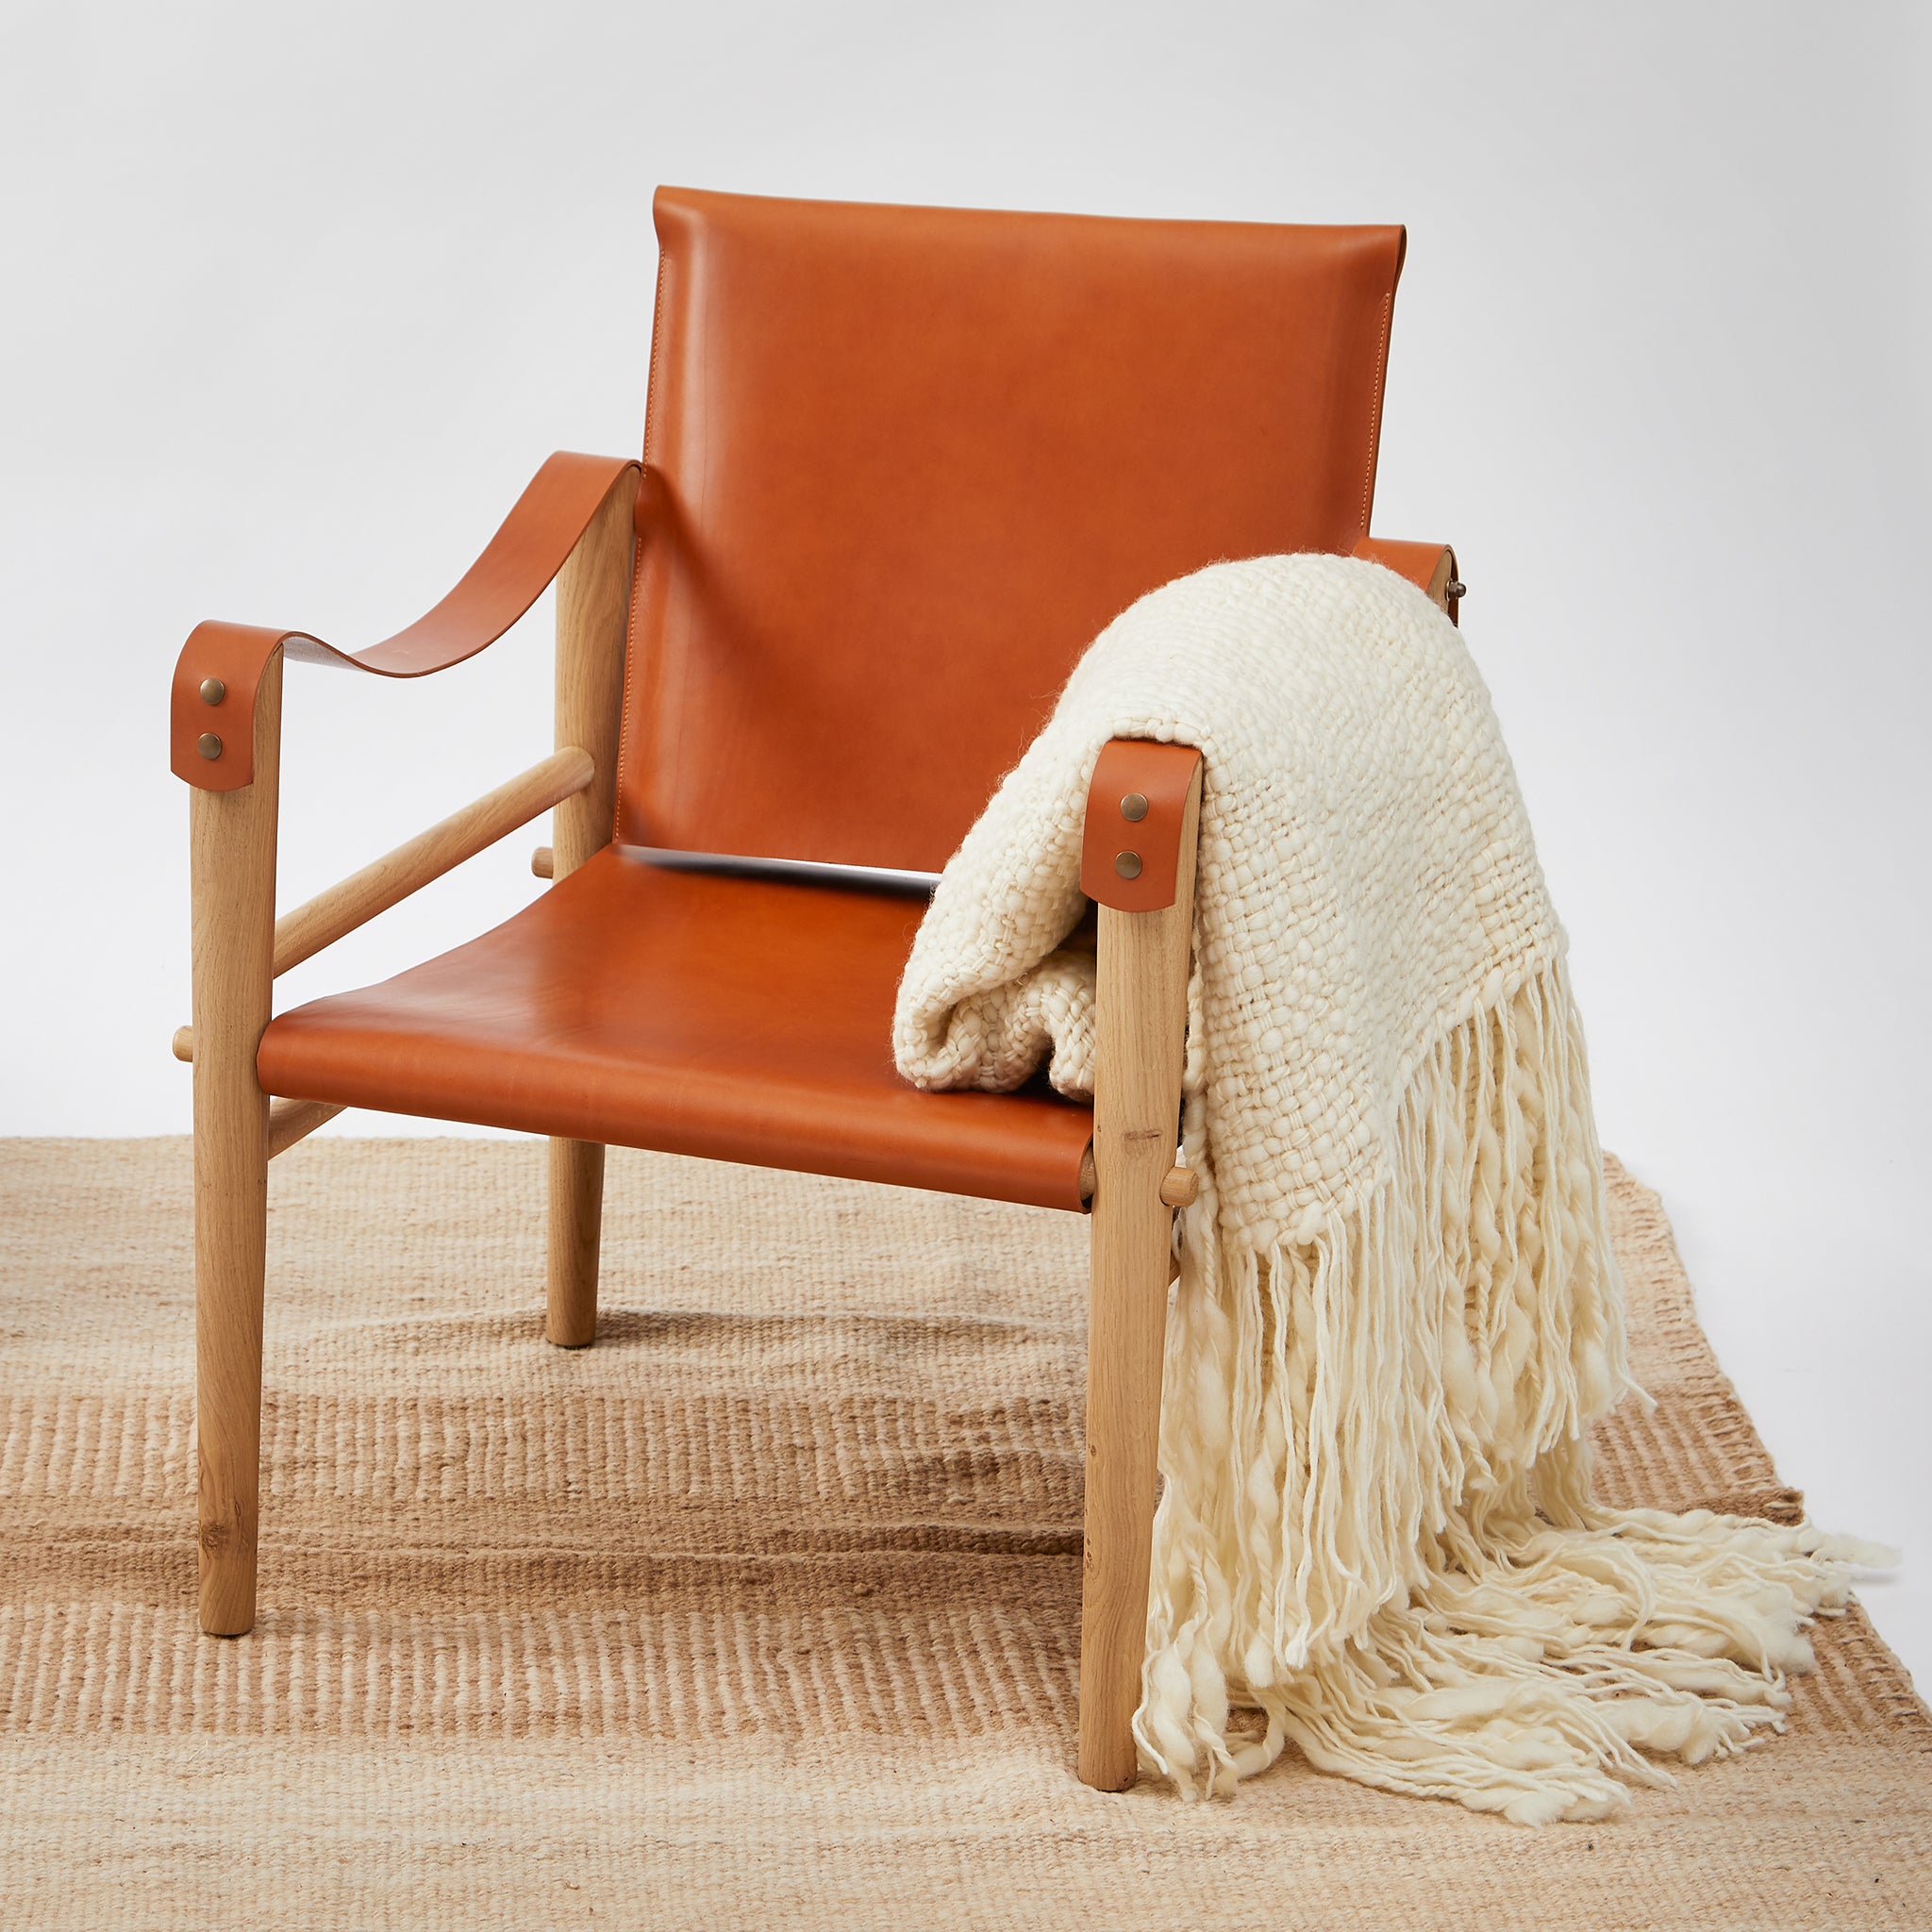 Handwoven merino wool blanket Sueño and Safari Chair - By Native